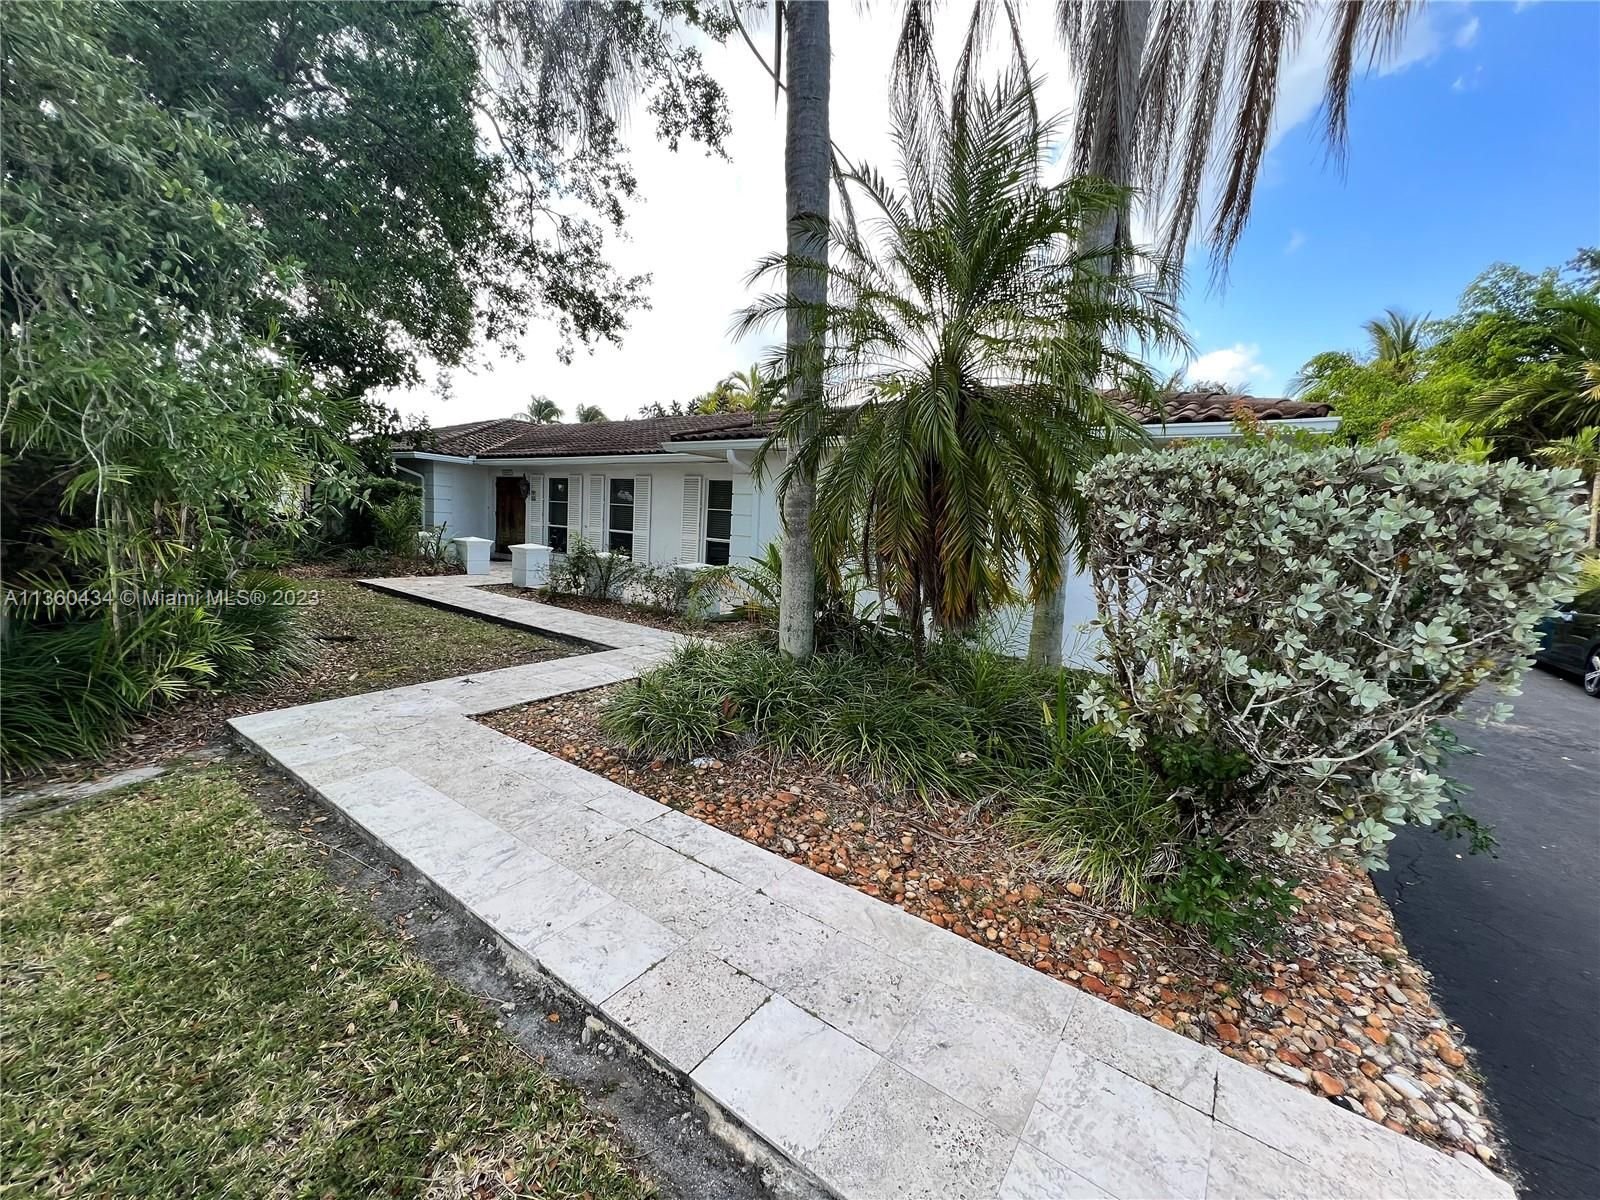 Real estate property located at 10057 126th St, Miami-Dade County, Miami, FL